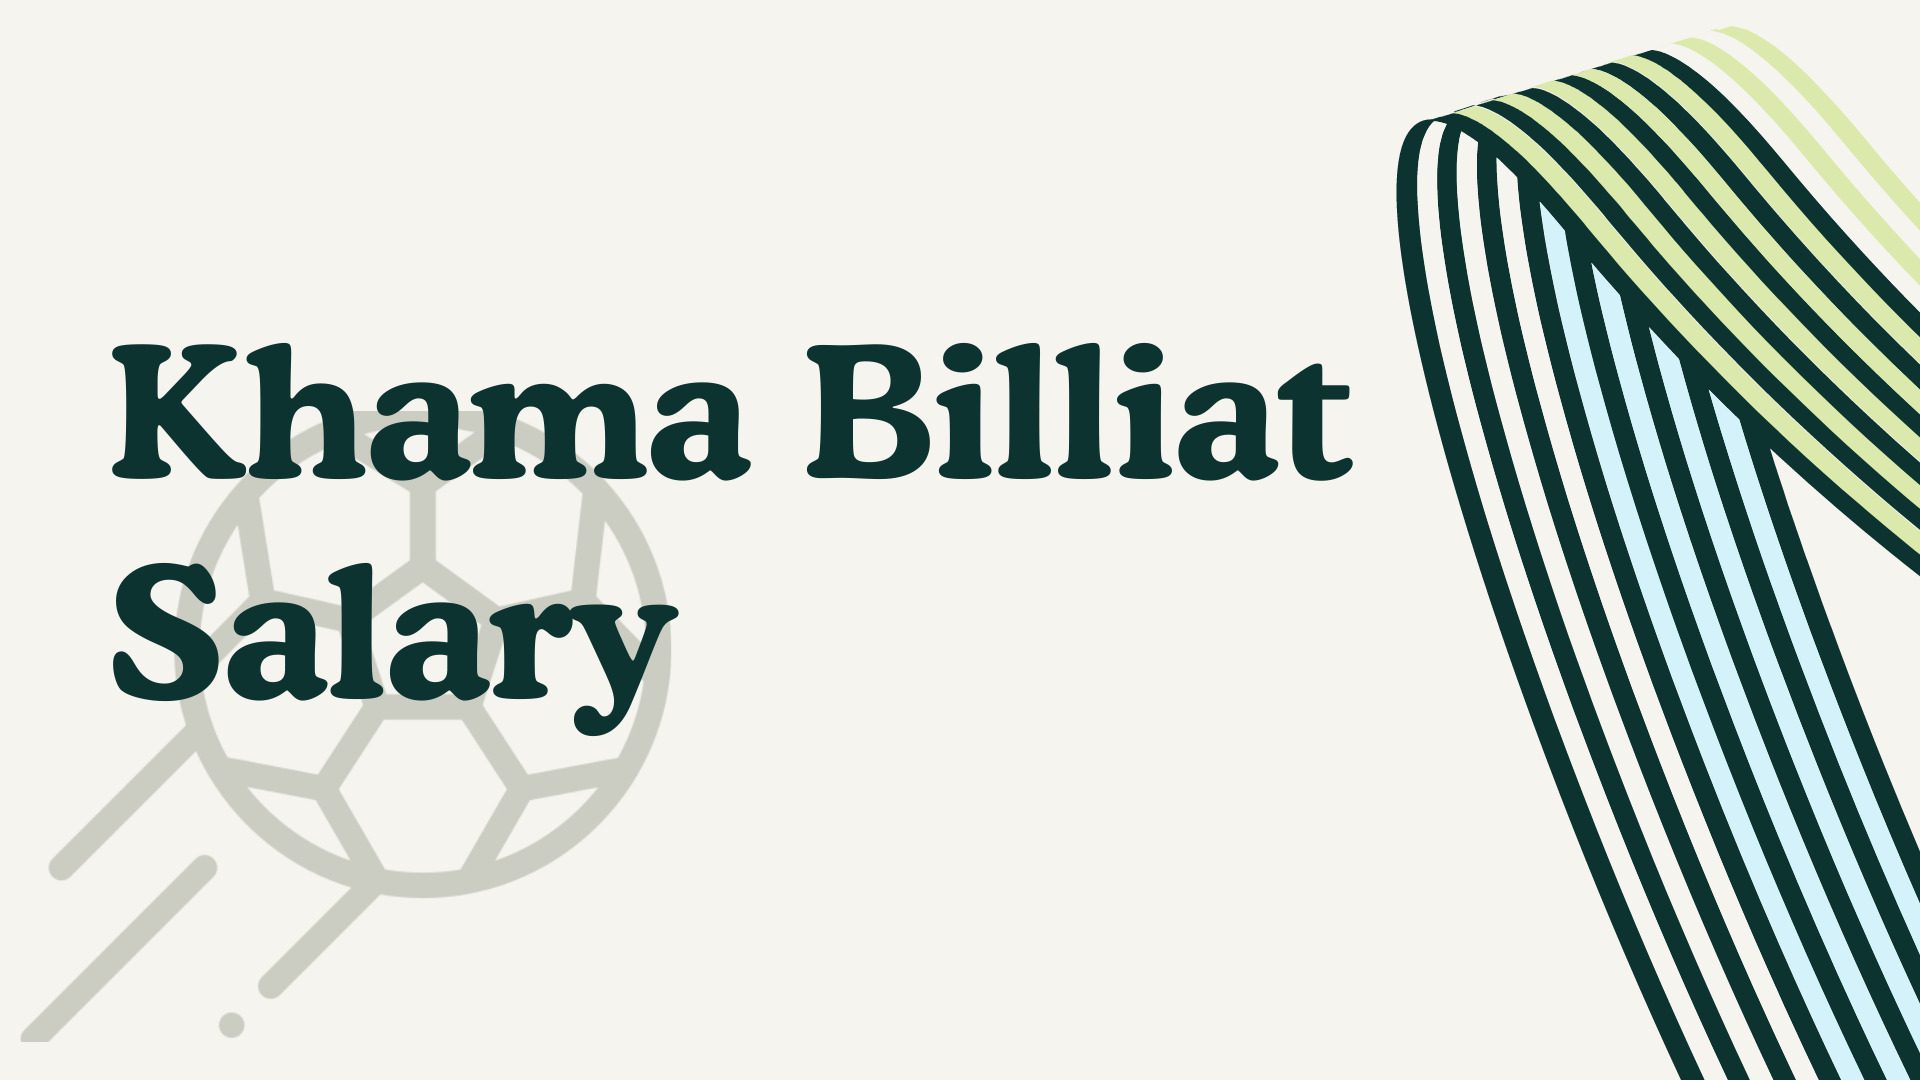 Khama Billiat Salary